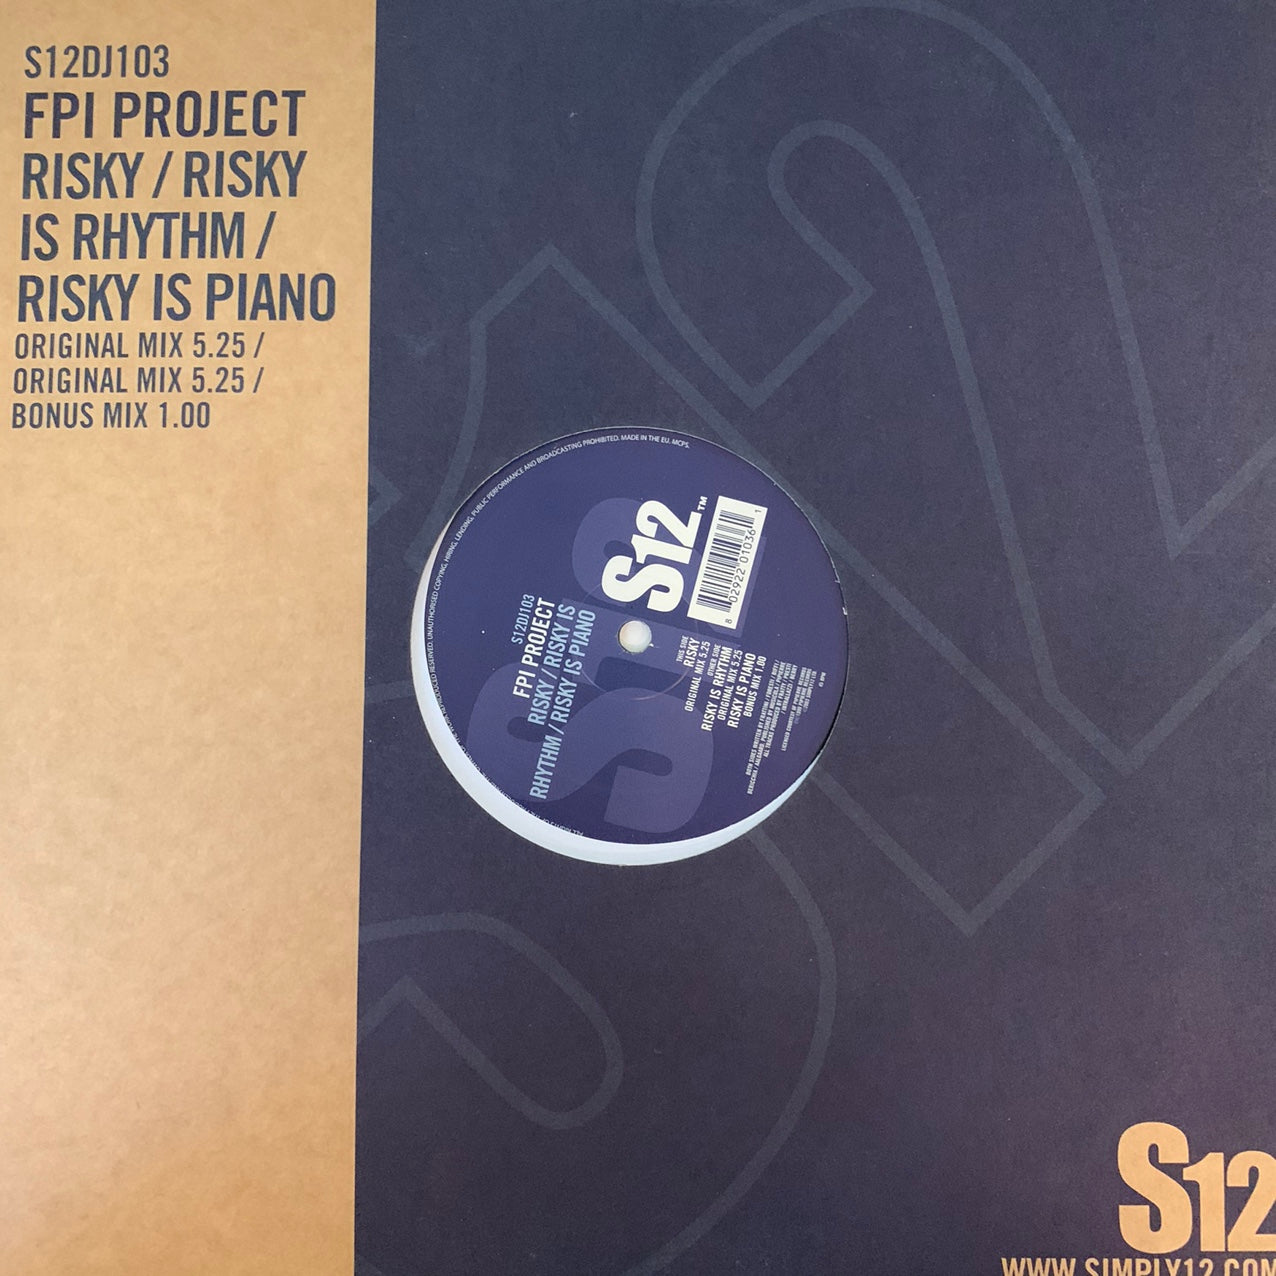 FPI Project “Risky” / “Risky is Rhythm” / “Risky is Piano” 3 Track 12inch Vinyl